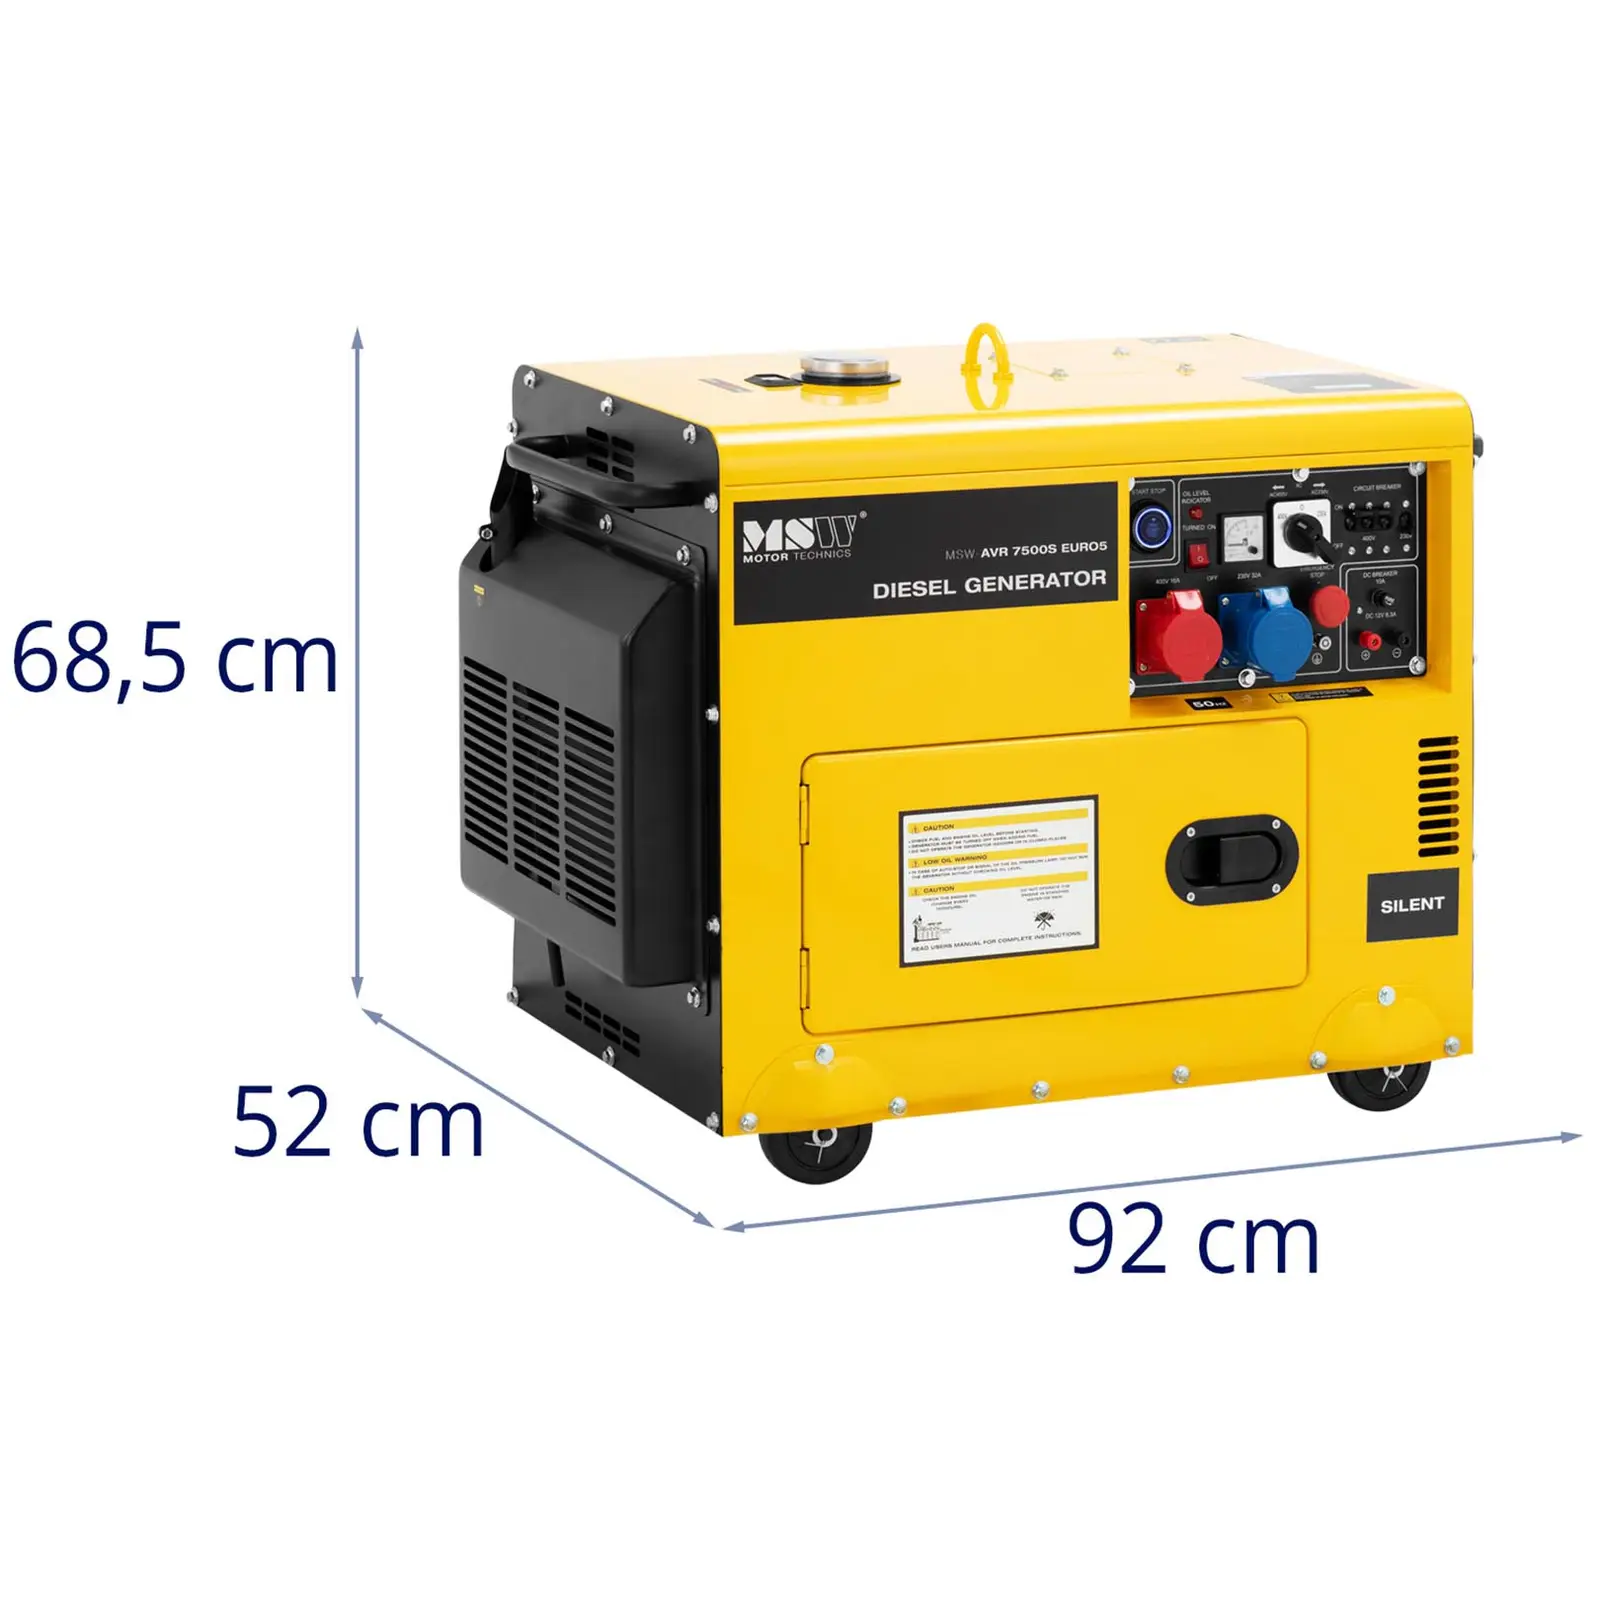 Dizelski generator - 6370 / 7500 W - 16 L - 230/400 V - mobilni - AVR - Euro 5